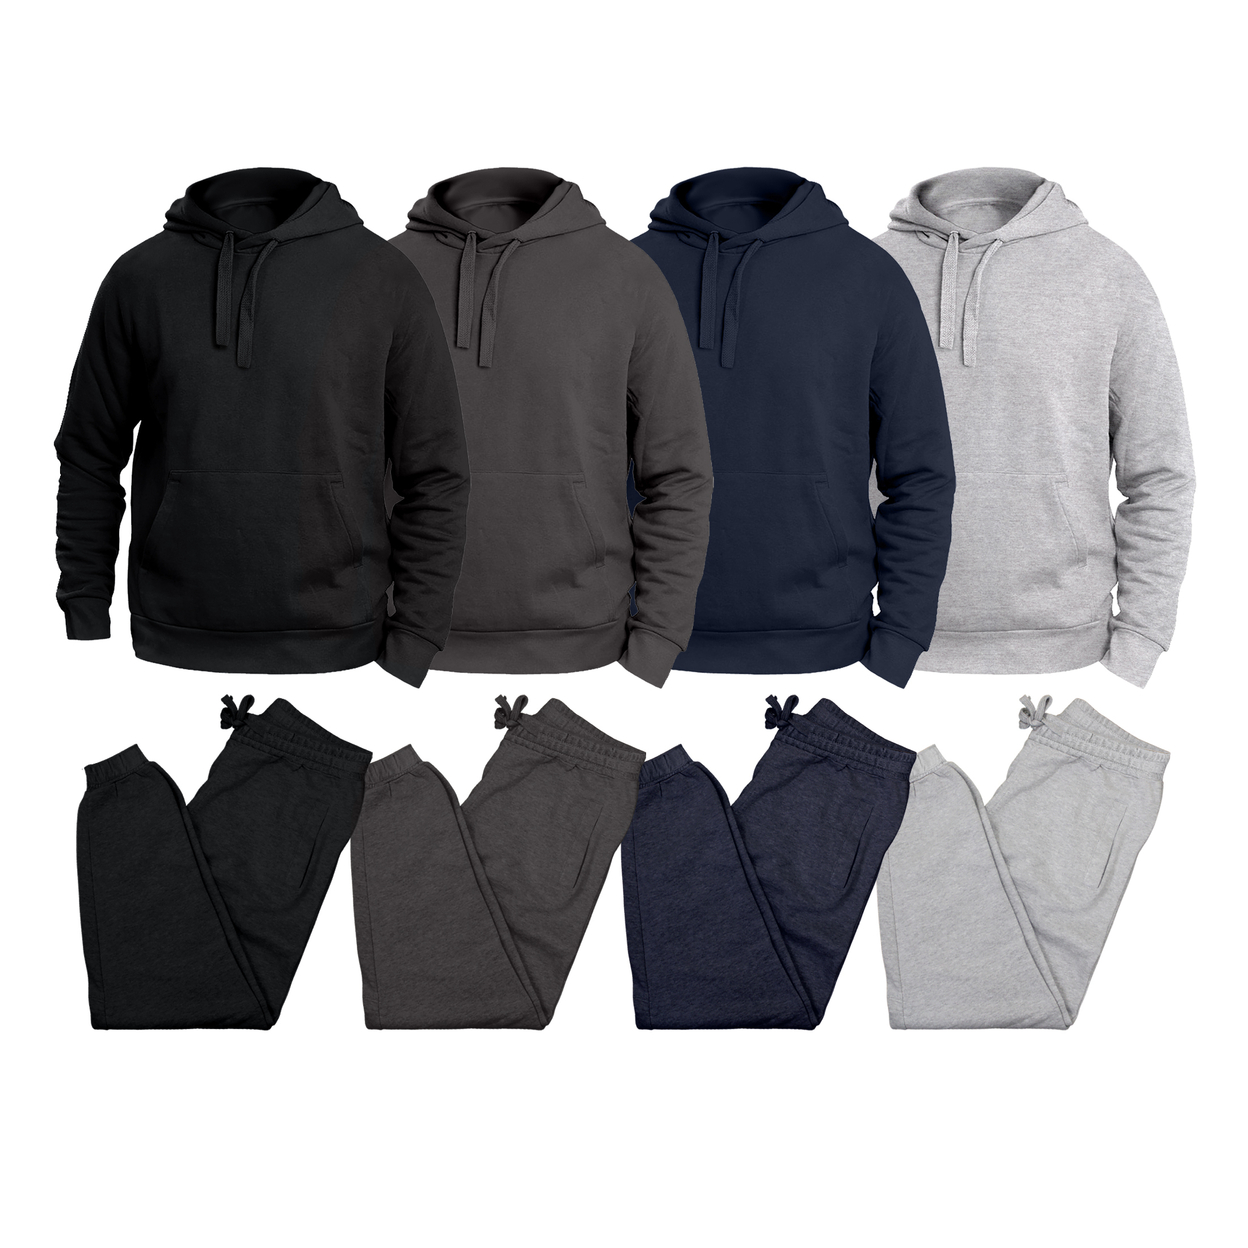 Multi-Pack: Big & Tall Men's Winter Warm Cozy Athletic Fleece Lined Multi-Pocket Cargo Sweatsuit - Black, 1-pack, 3xl